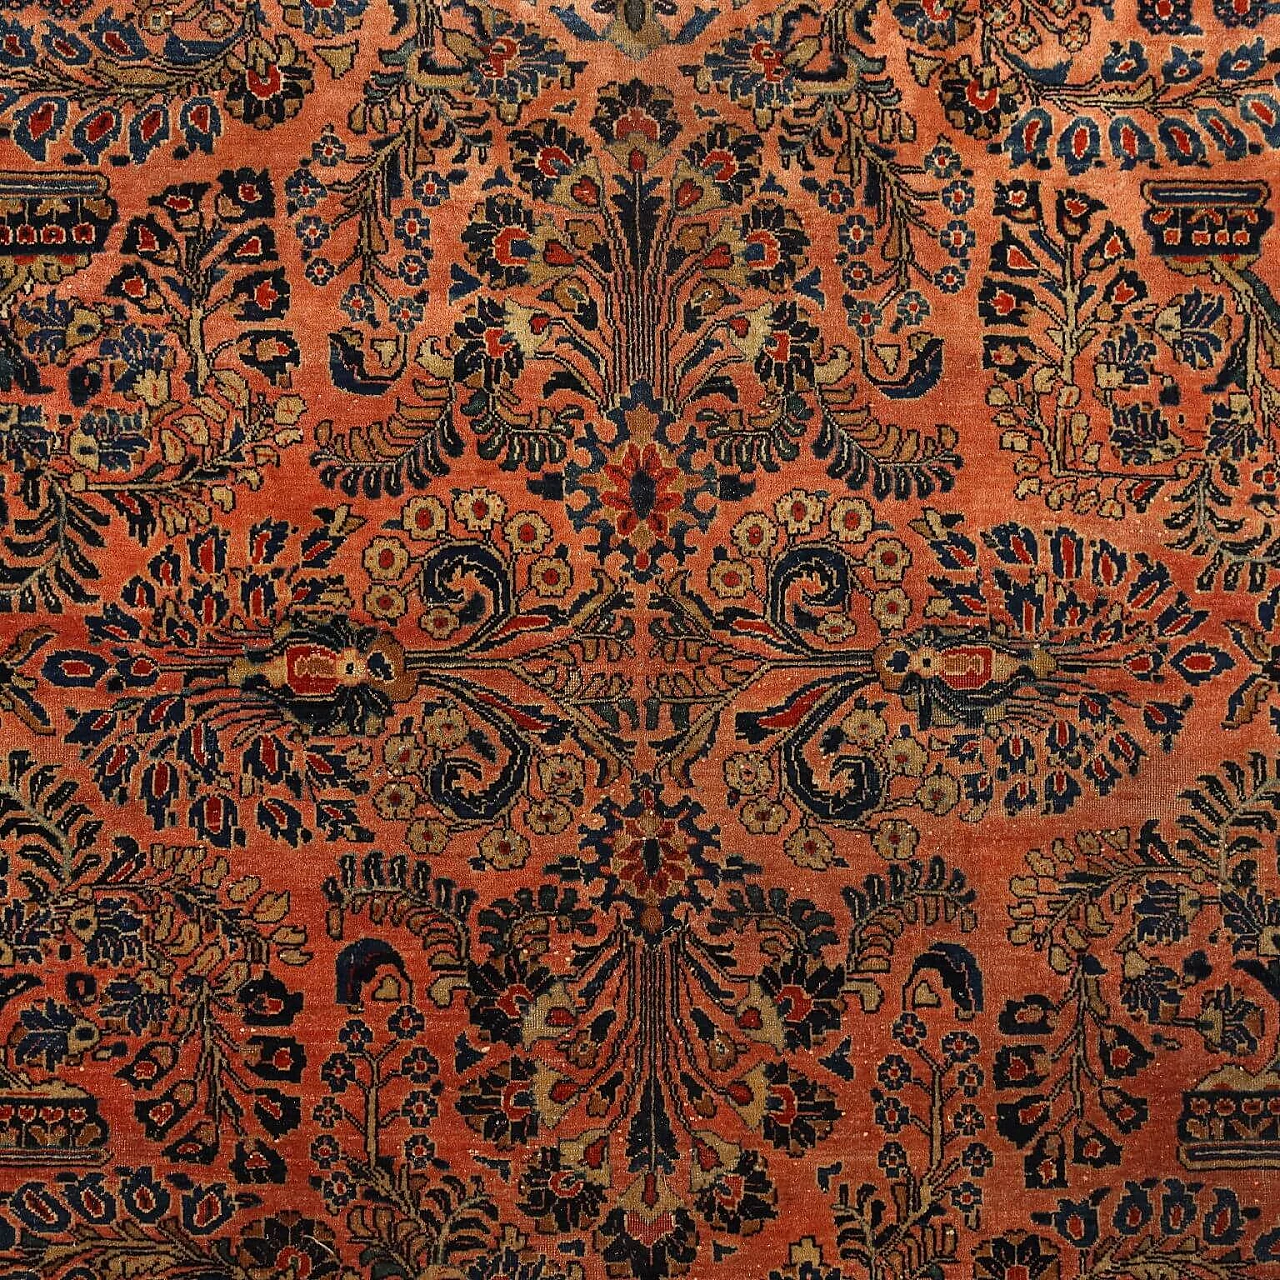 Iranian Saruk American cotton and wool carpet 3